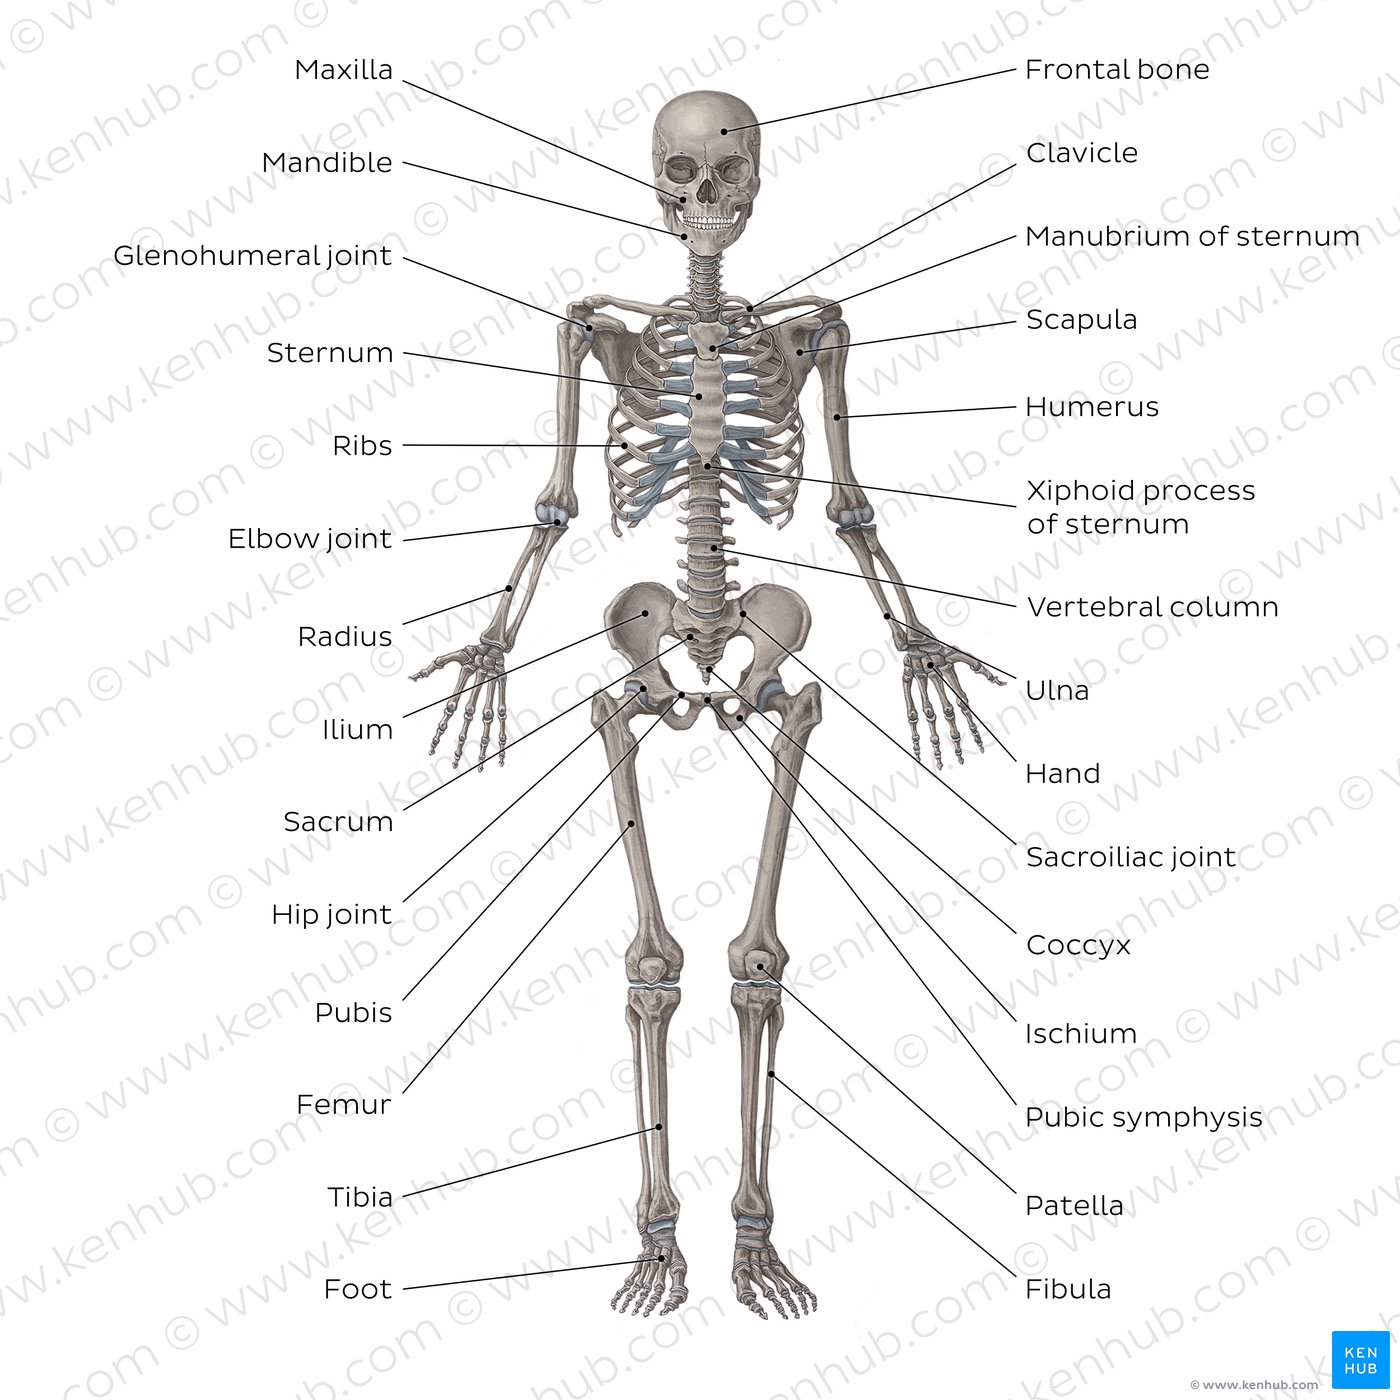 Main bones of the skeletal system (anterior view)